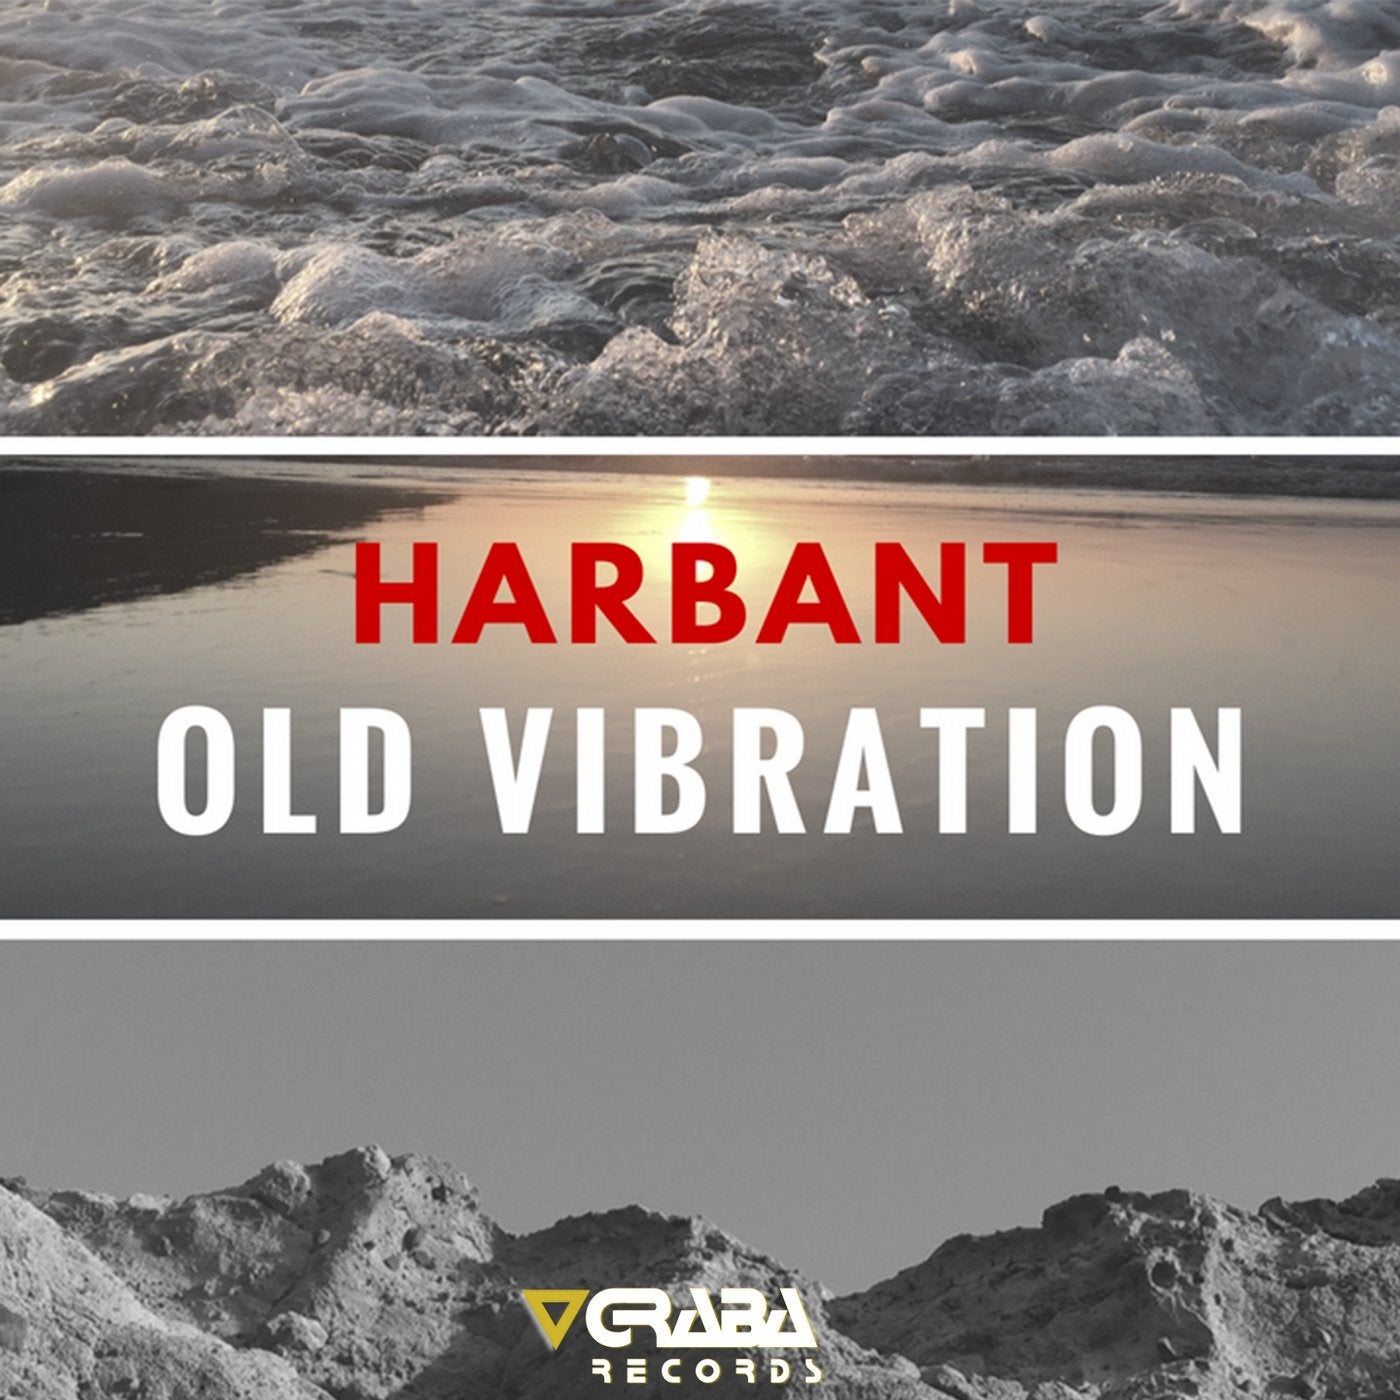 Old Vibration